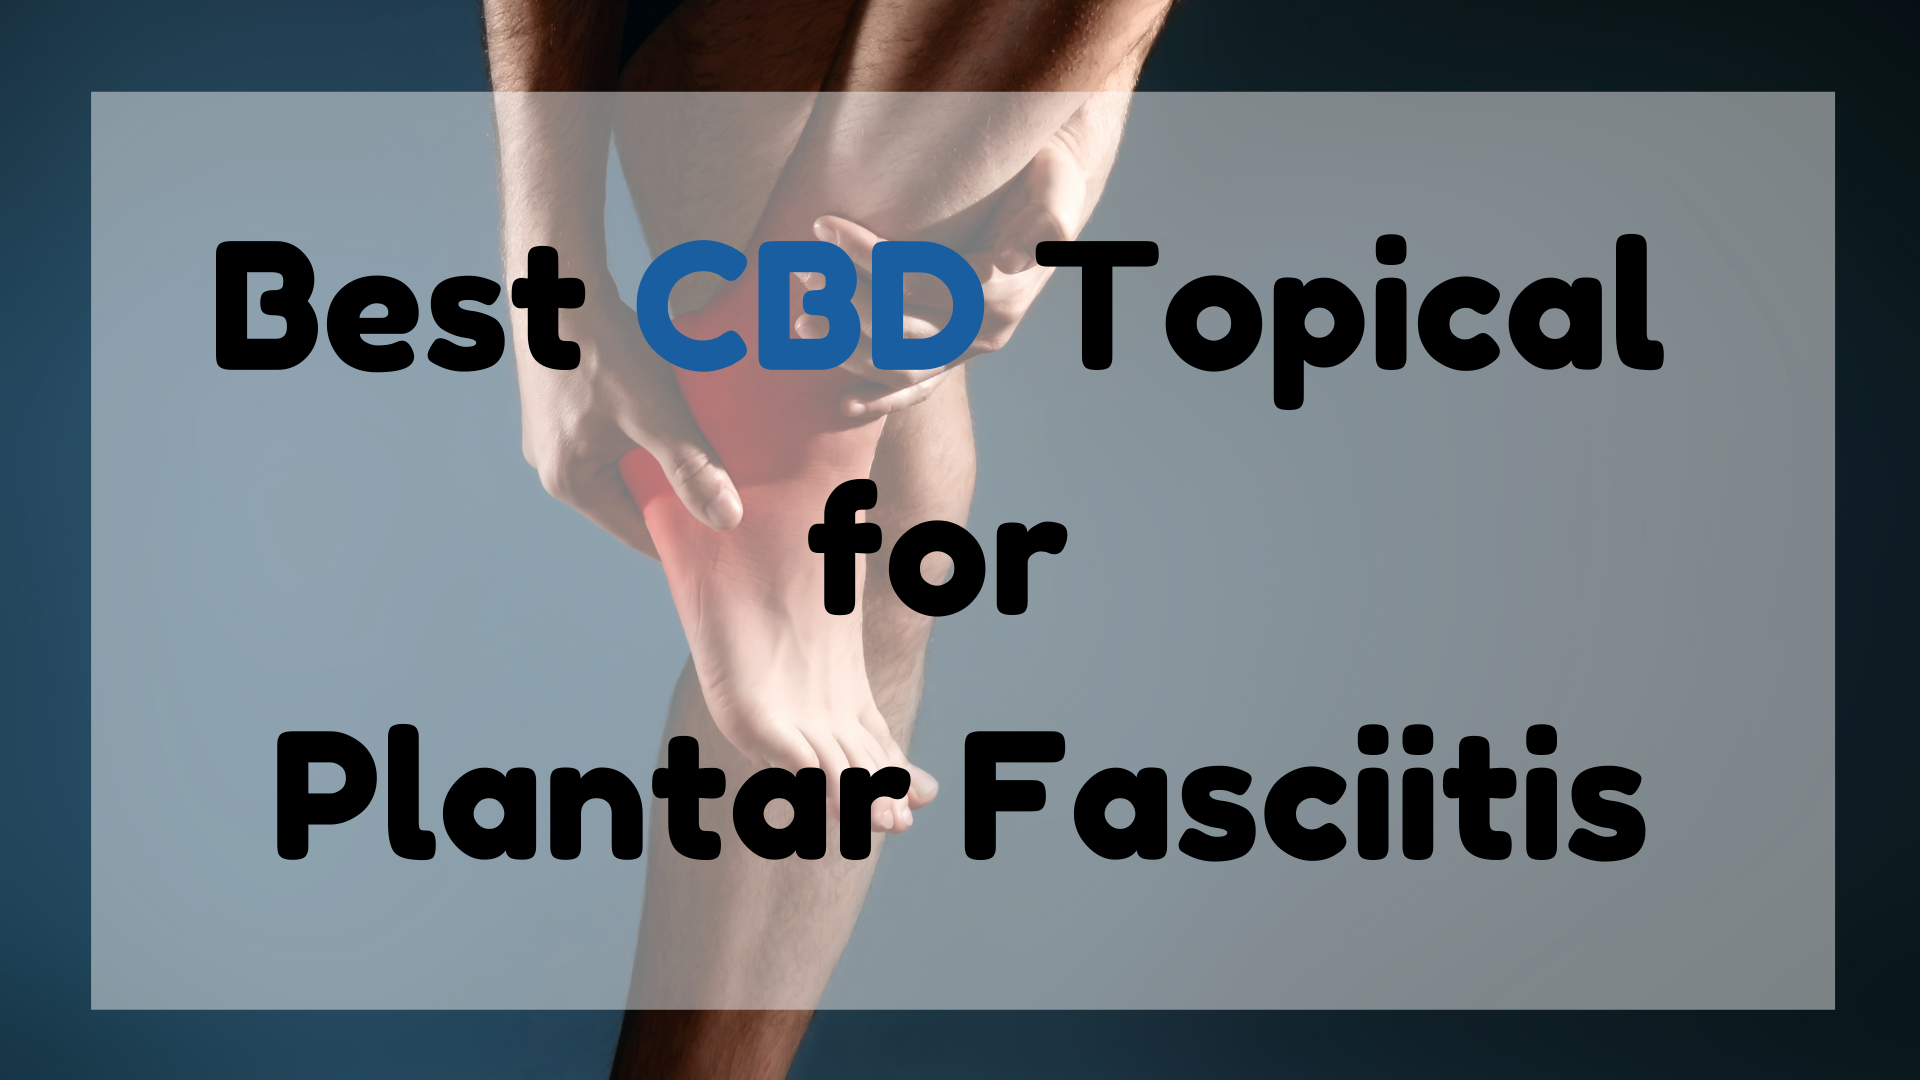 Best CBD Topical for Plantar Fasciitis